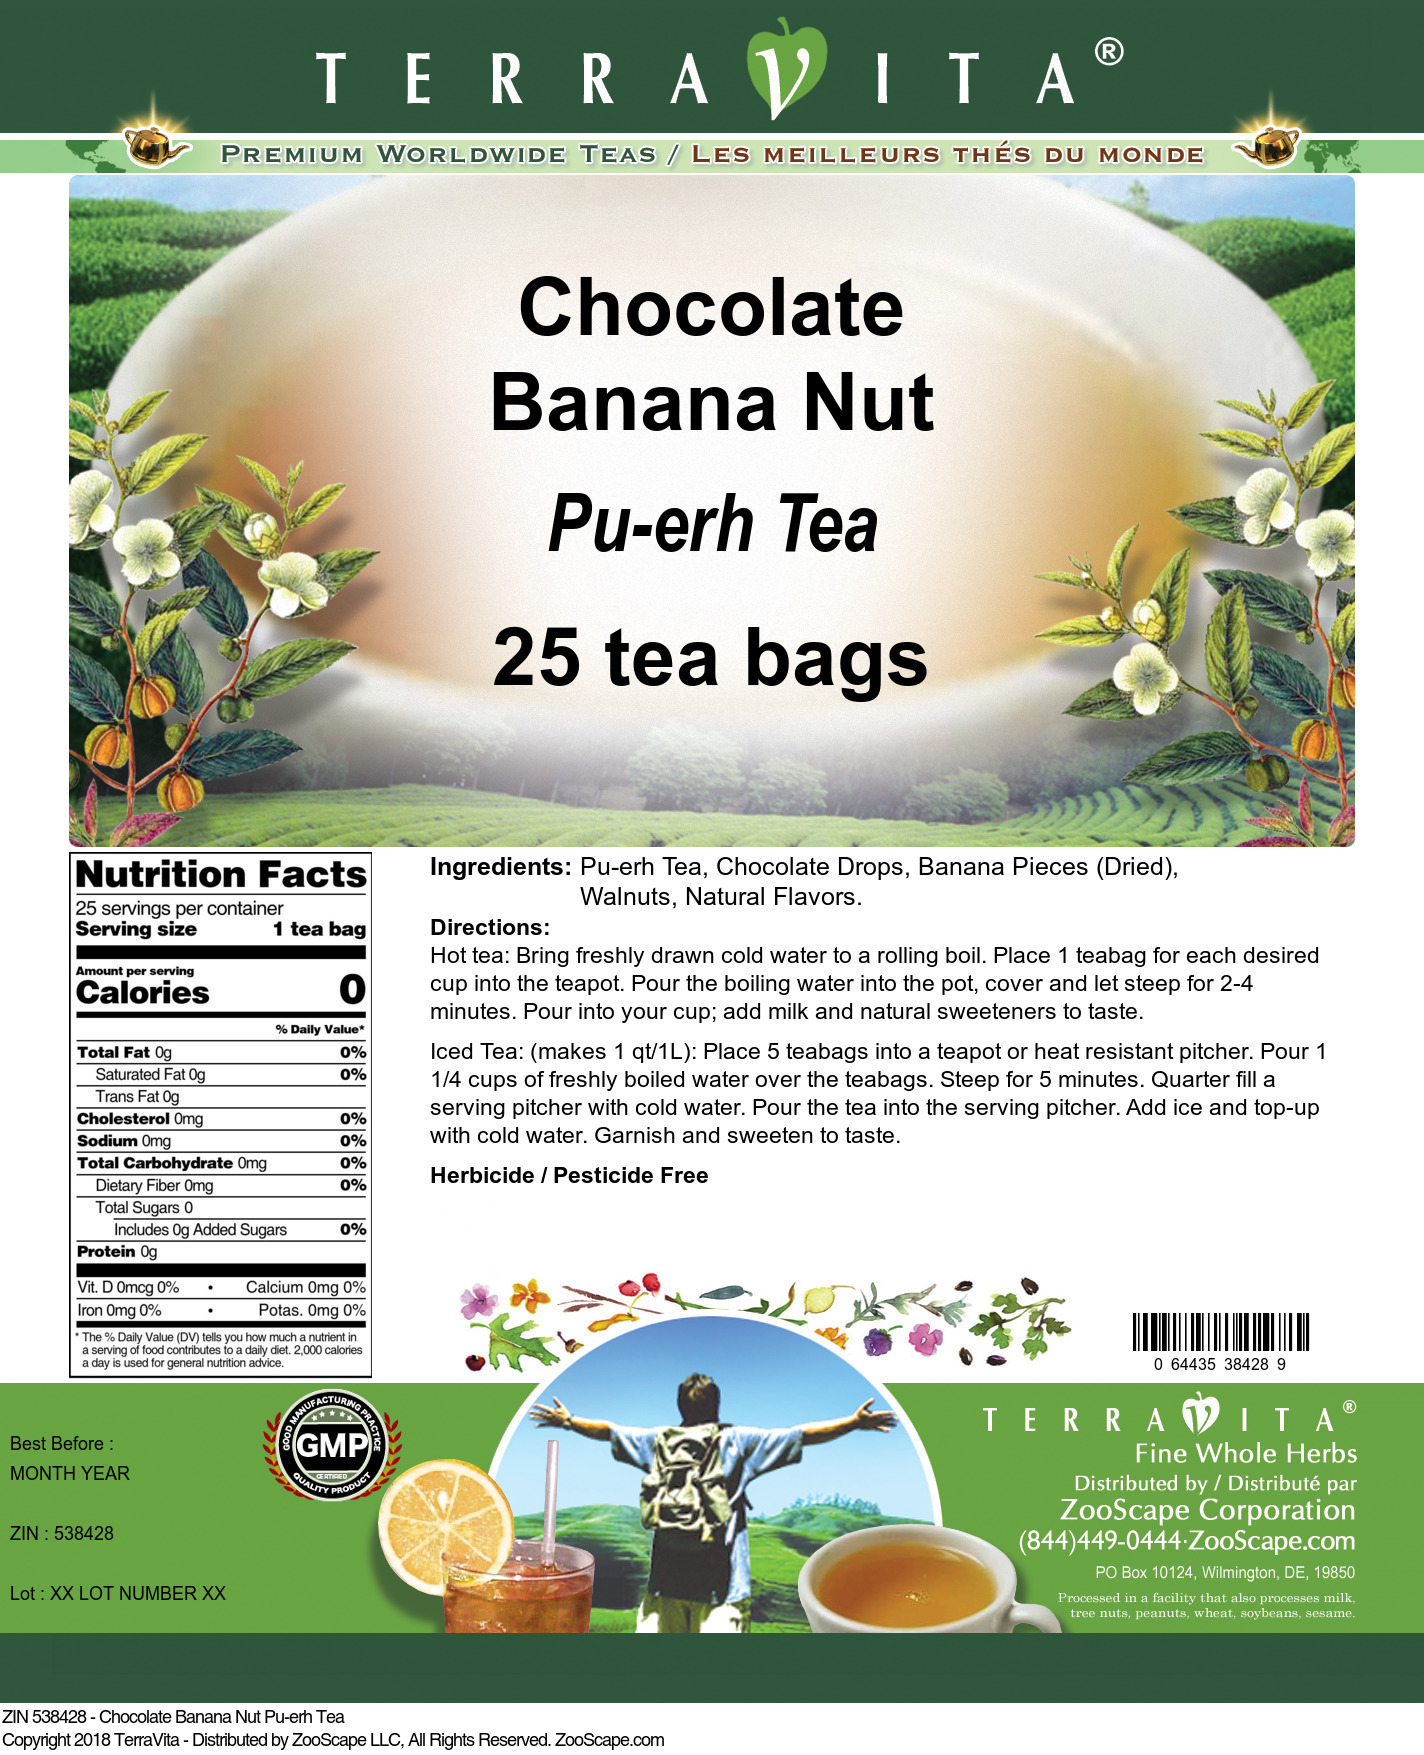 Chocolate Banana Nut Pu-erh Tea - Label